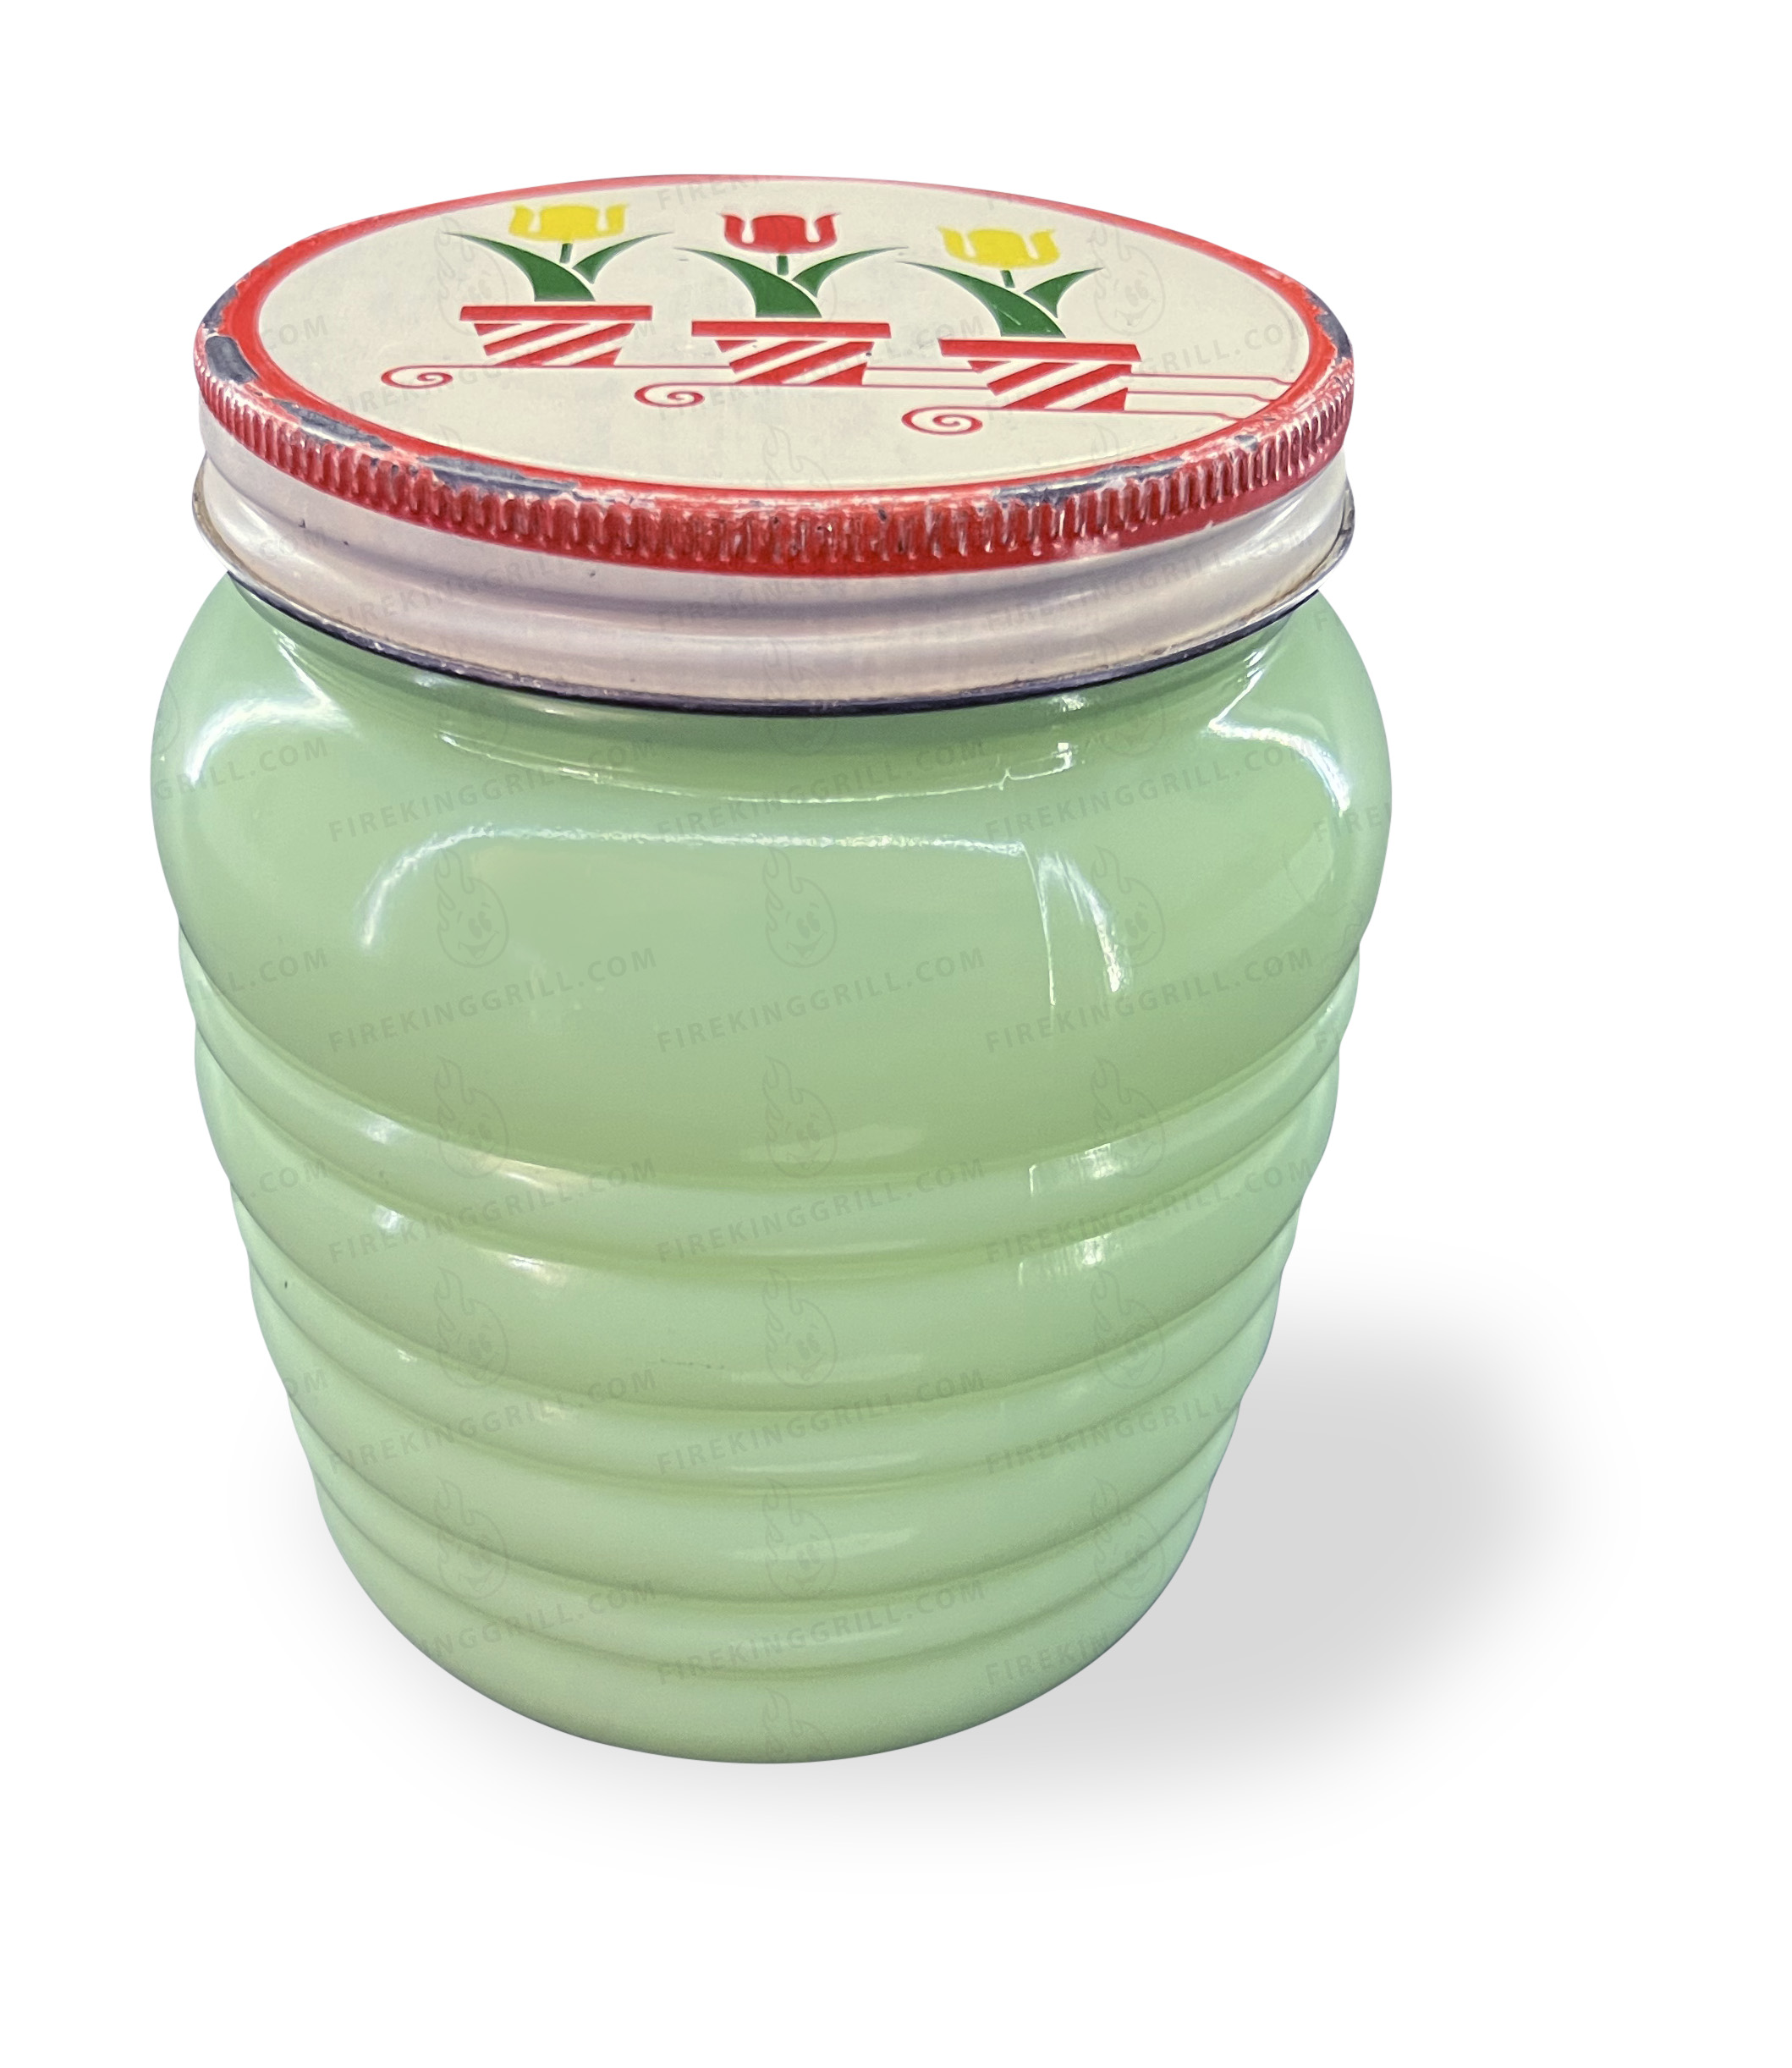 Grease jar with metal Tulip lid